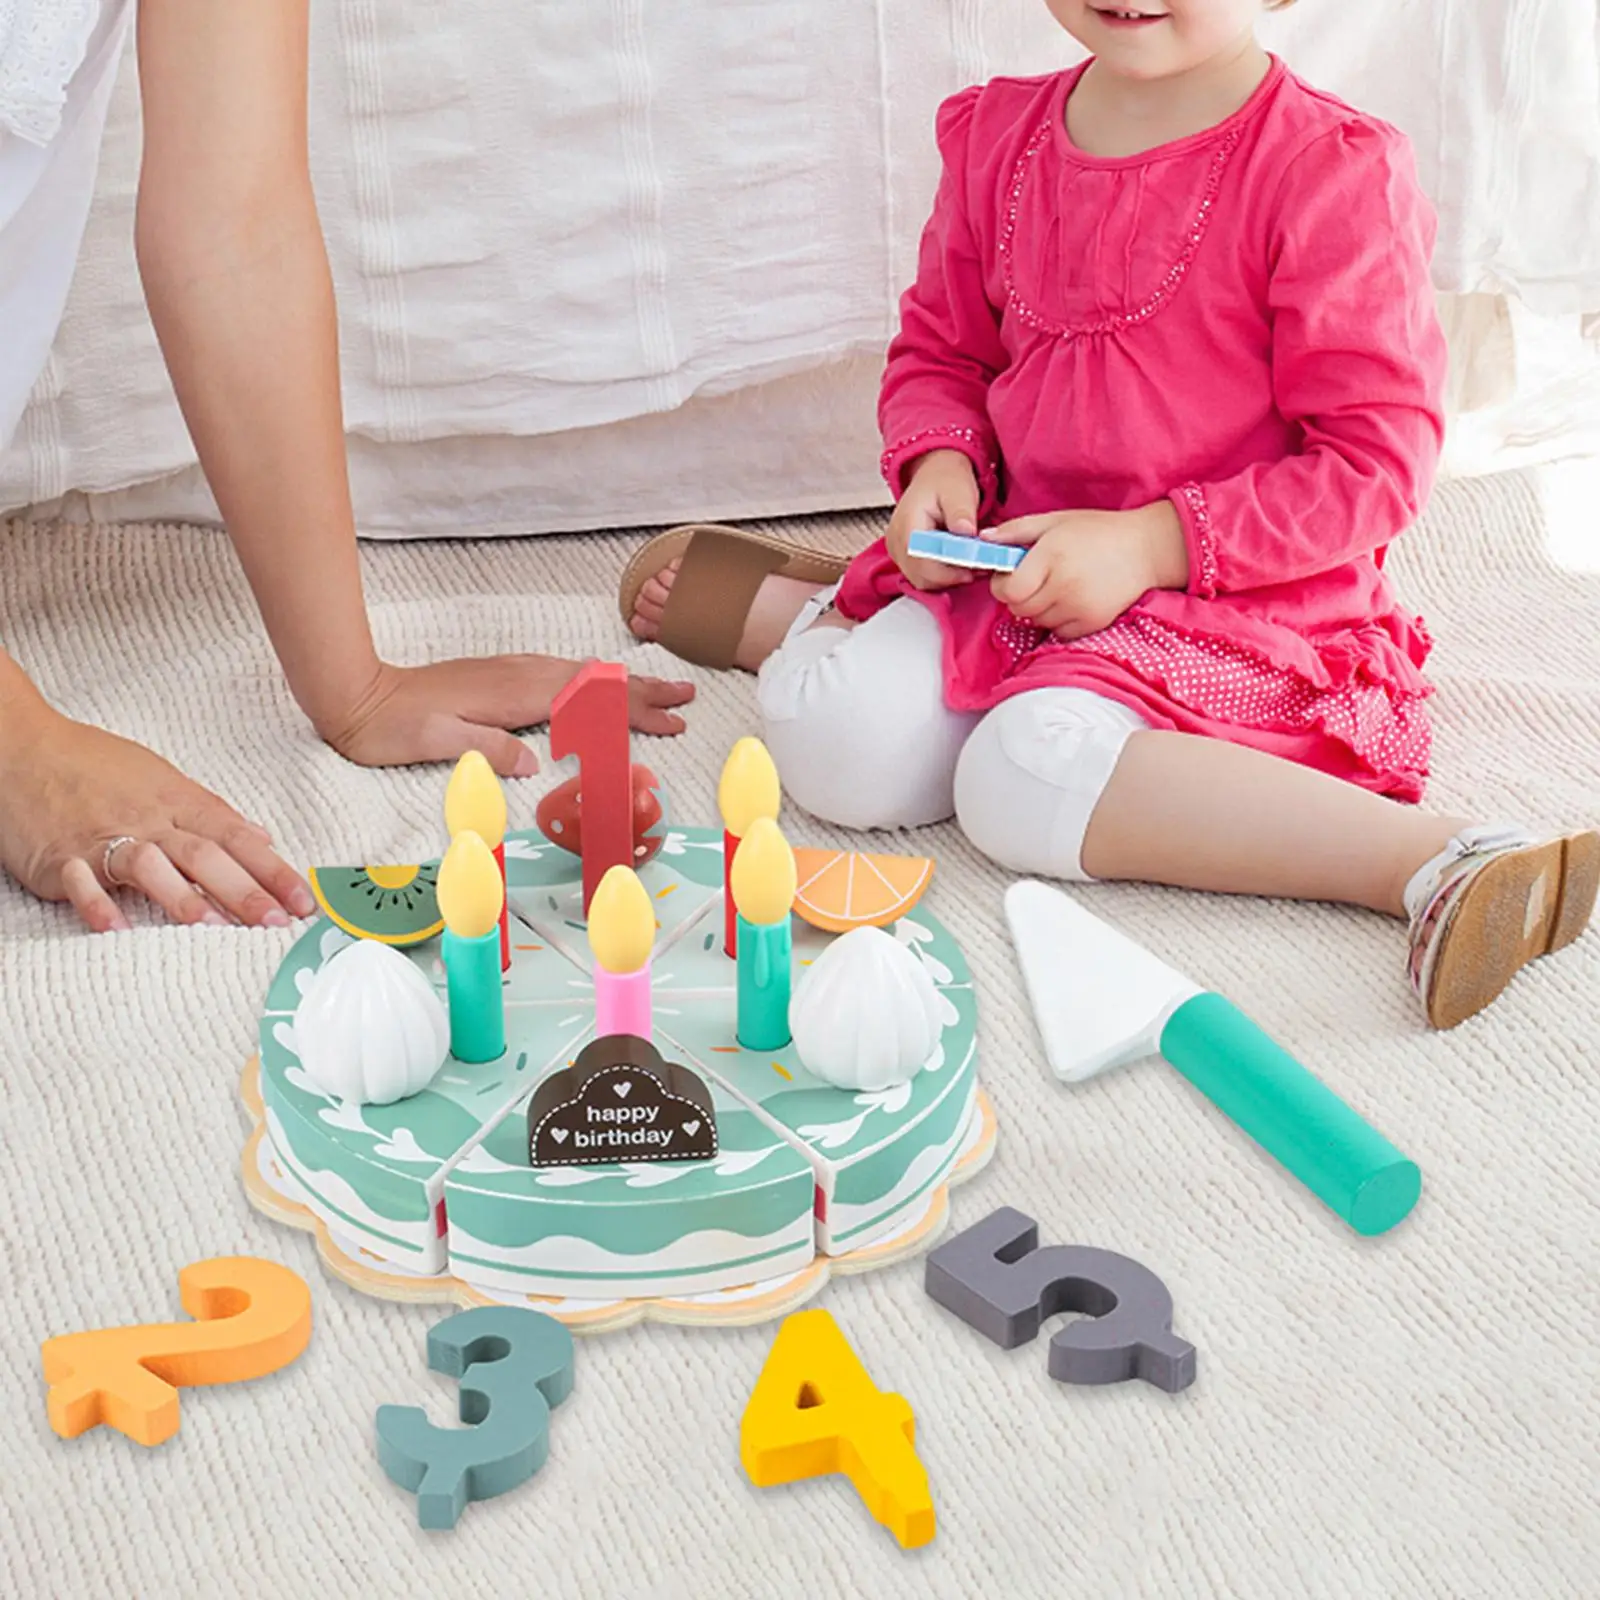 Birthday Cake Toy Birthday Cake Playset Early Educational Toy Wooden Toys DIY Pretend Play for Boys Girls Preschool